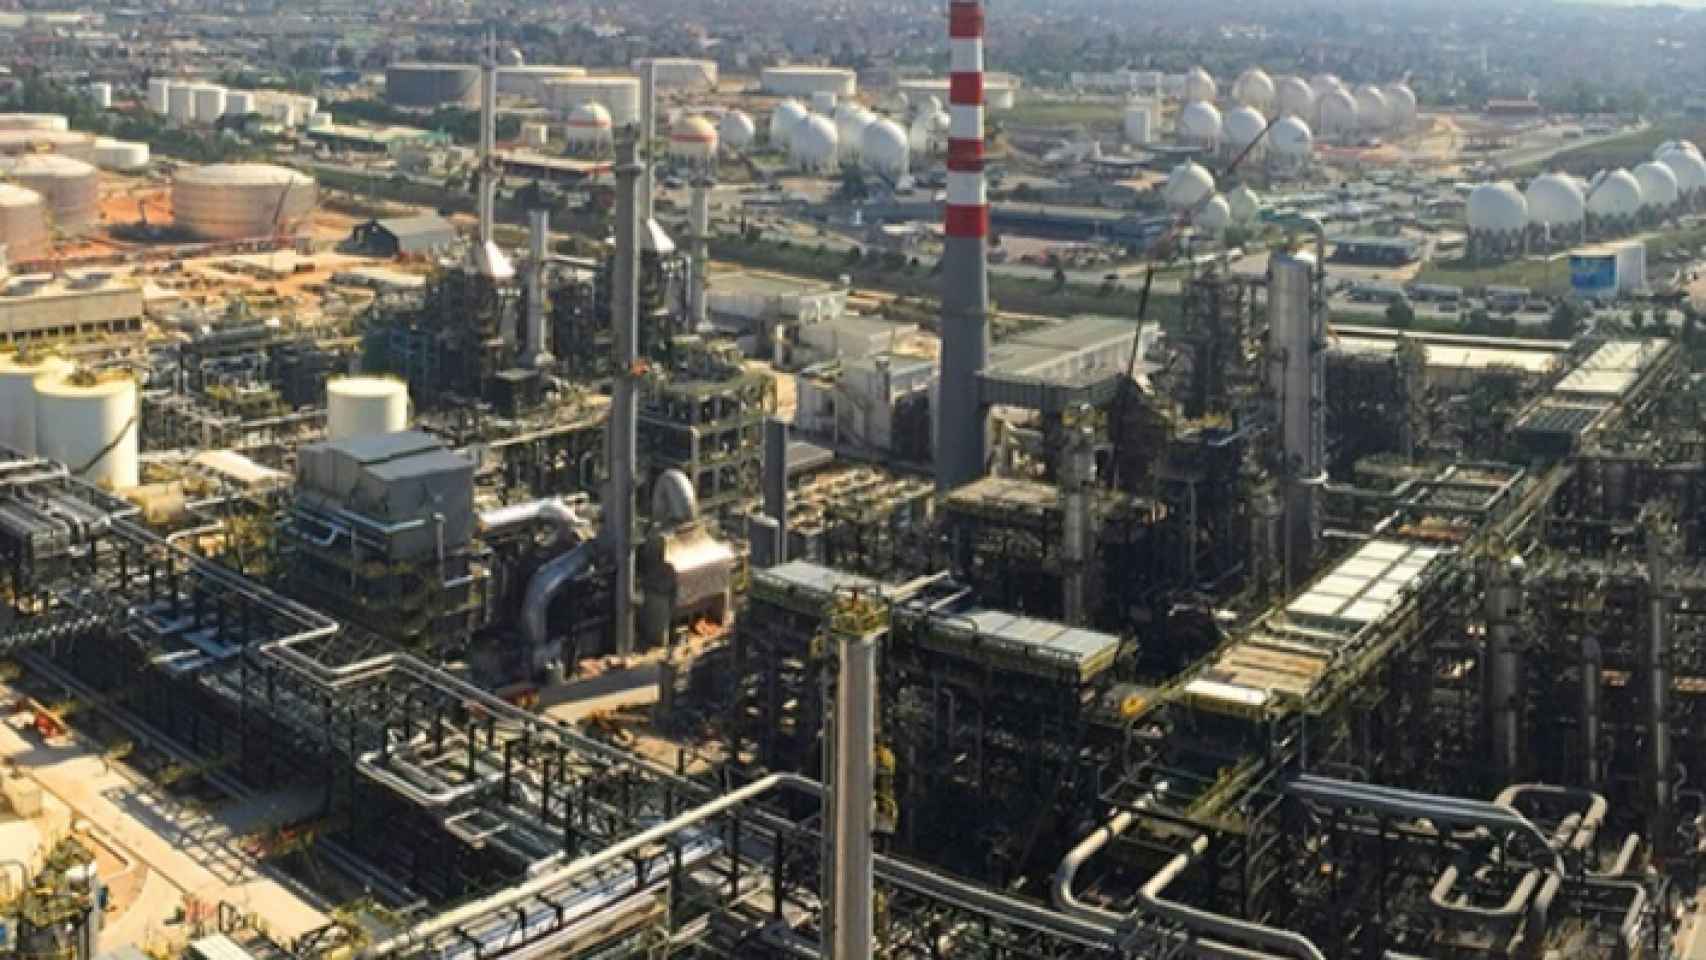 Técnicas Reunidas gana un contrato de 425 millones en Catar para expandir su red de gas natural licuado